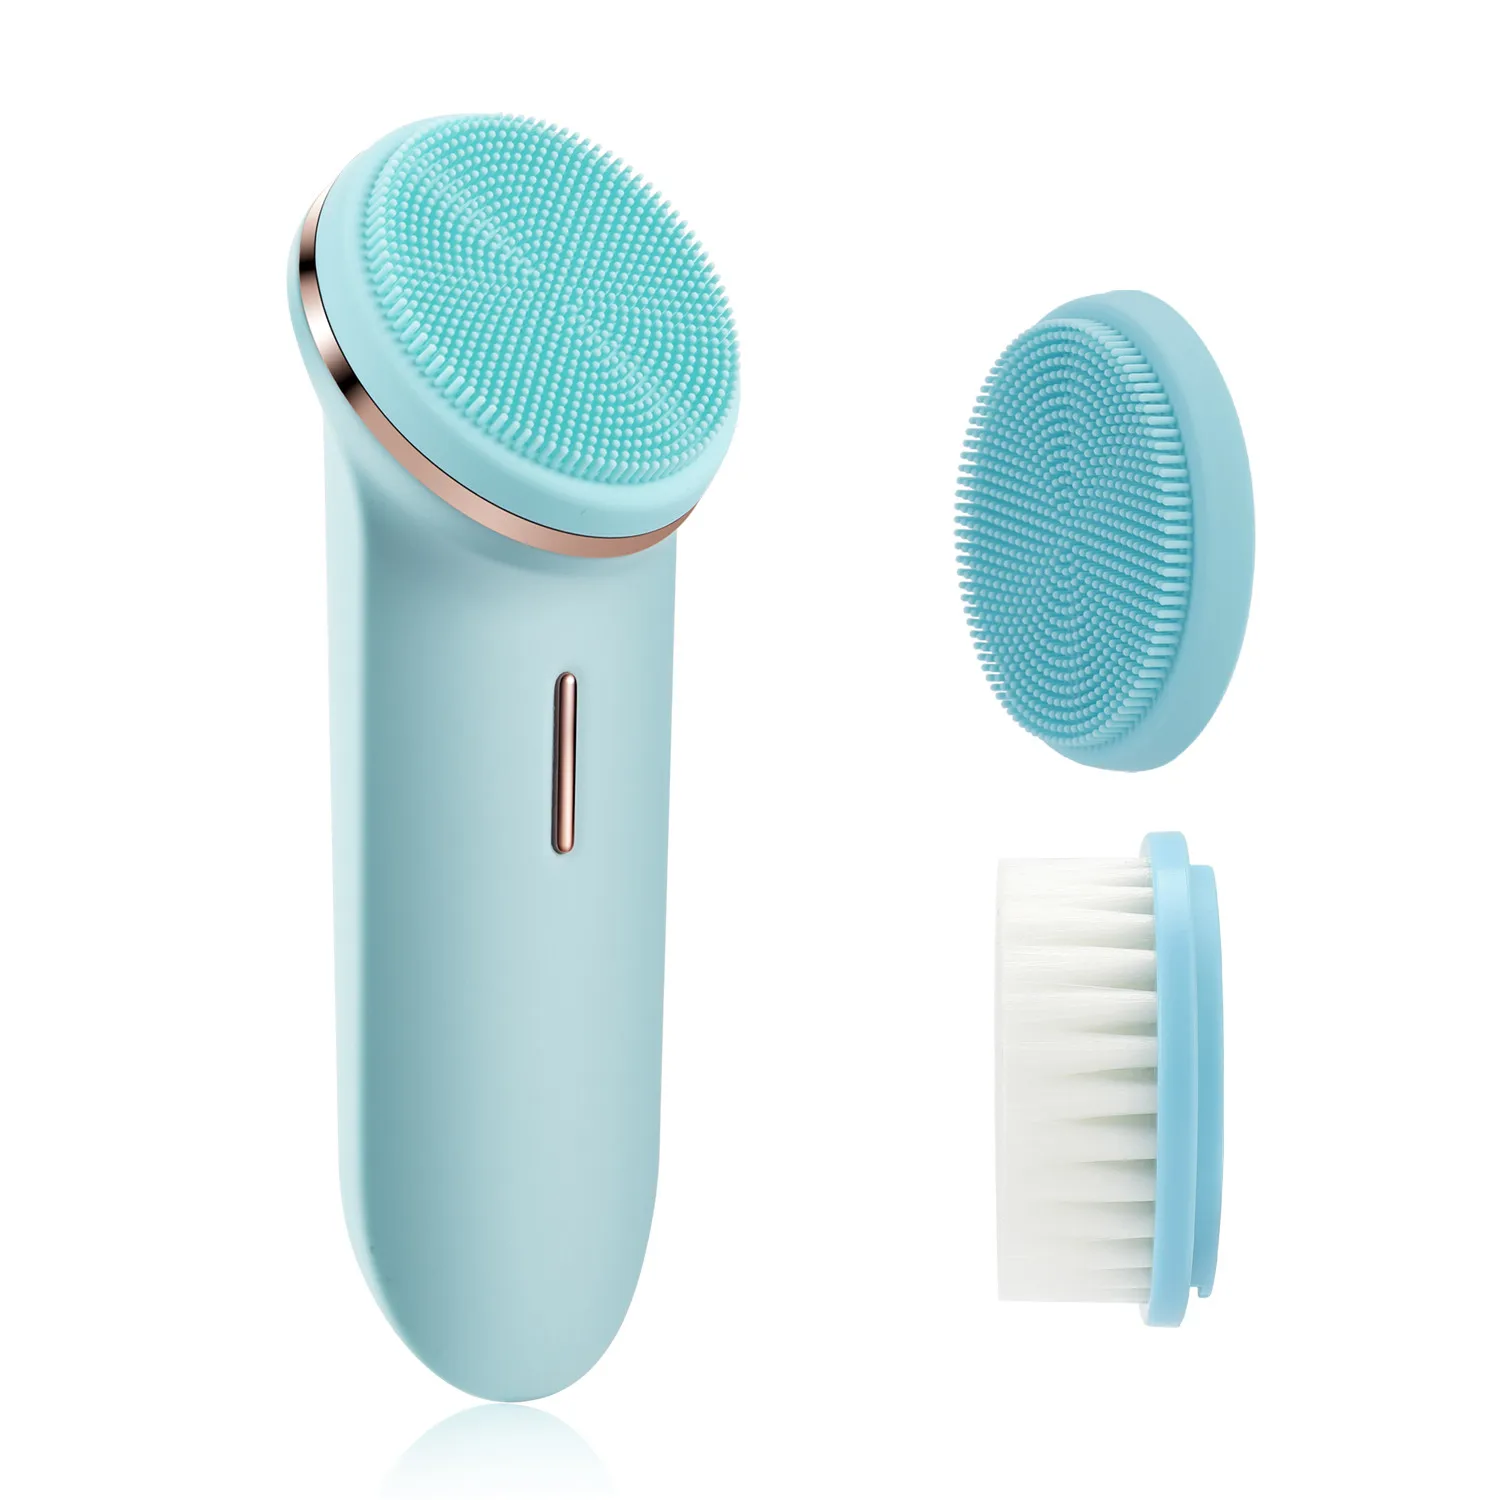 

Newest Skin spa machine ideas lumispa silicone facial cleansing brush exfoliator face brush, Blue